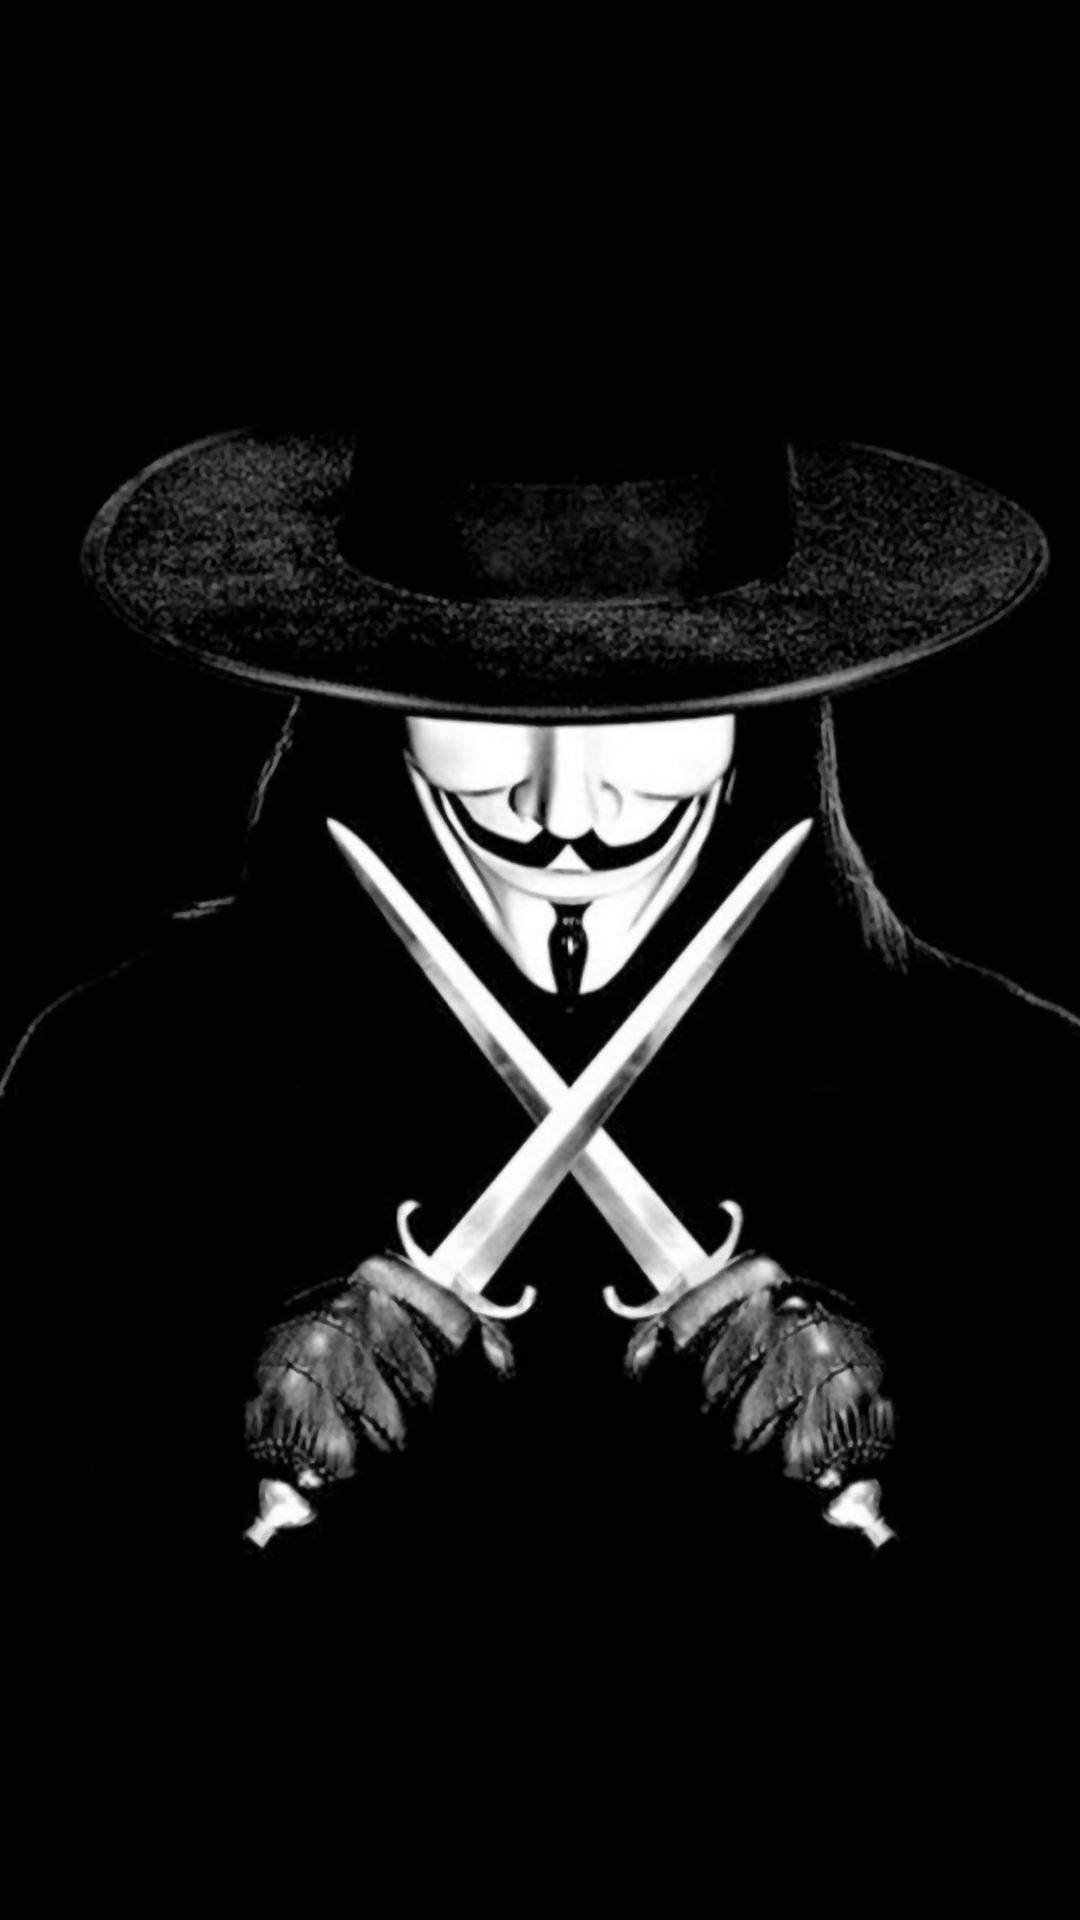 Vendetta On Black Iphone 6 Plus Wallpaper